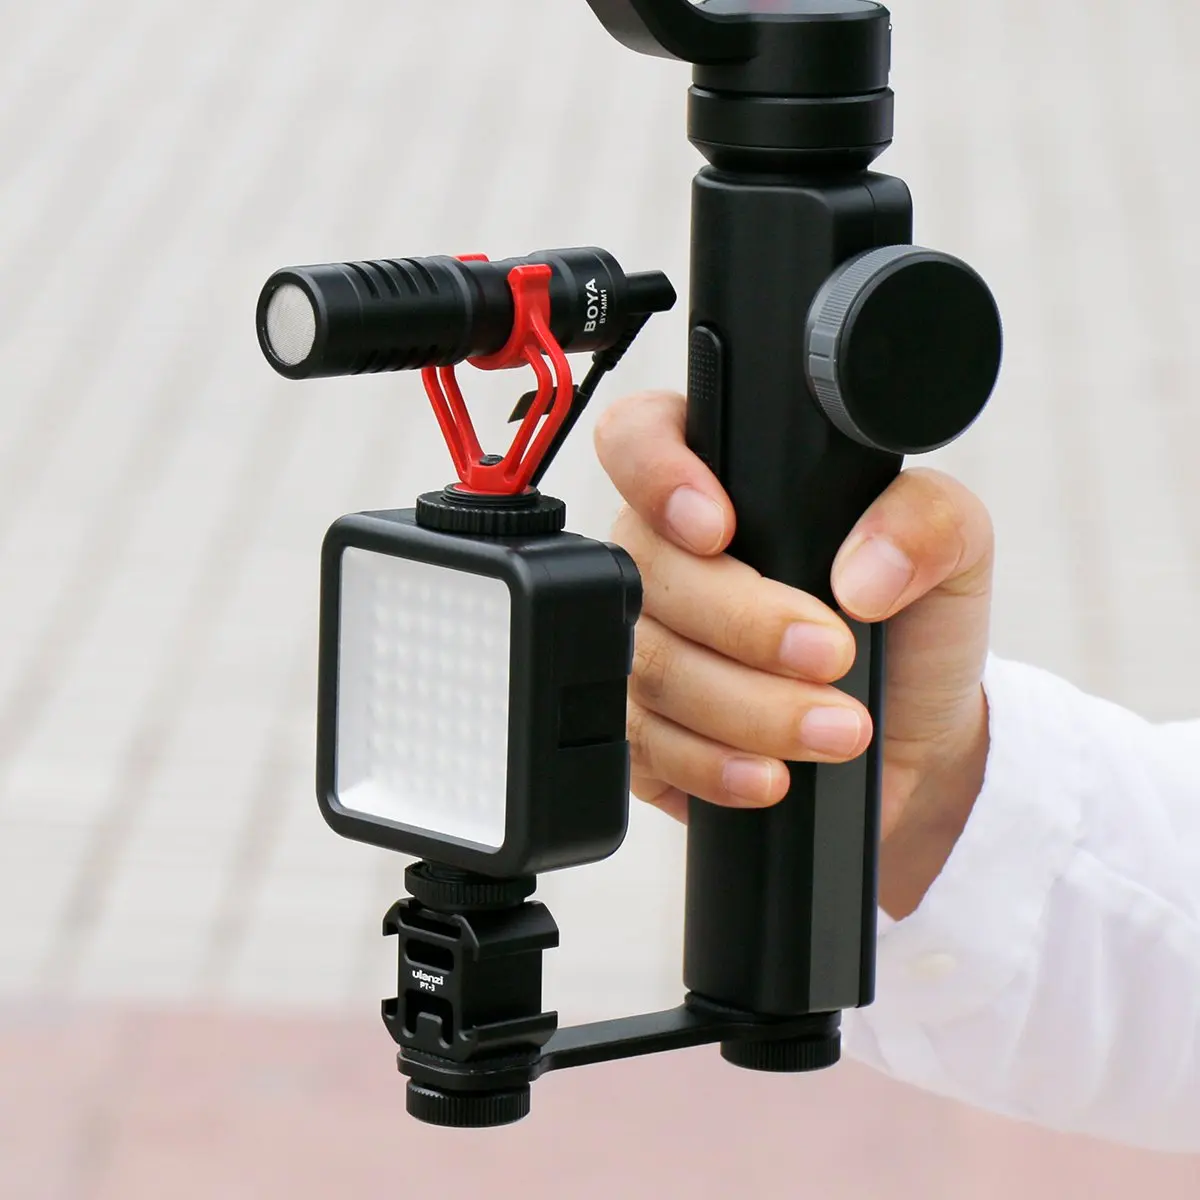 BOYA by-MM1 Universal Shotgun Mic Video Livestream Recording Stodio Camera Microphone for Phone Camera Tablet YouTube